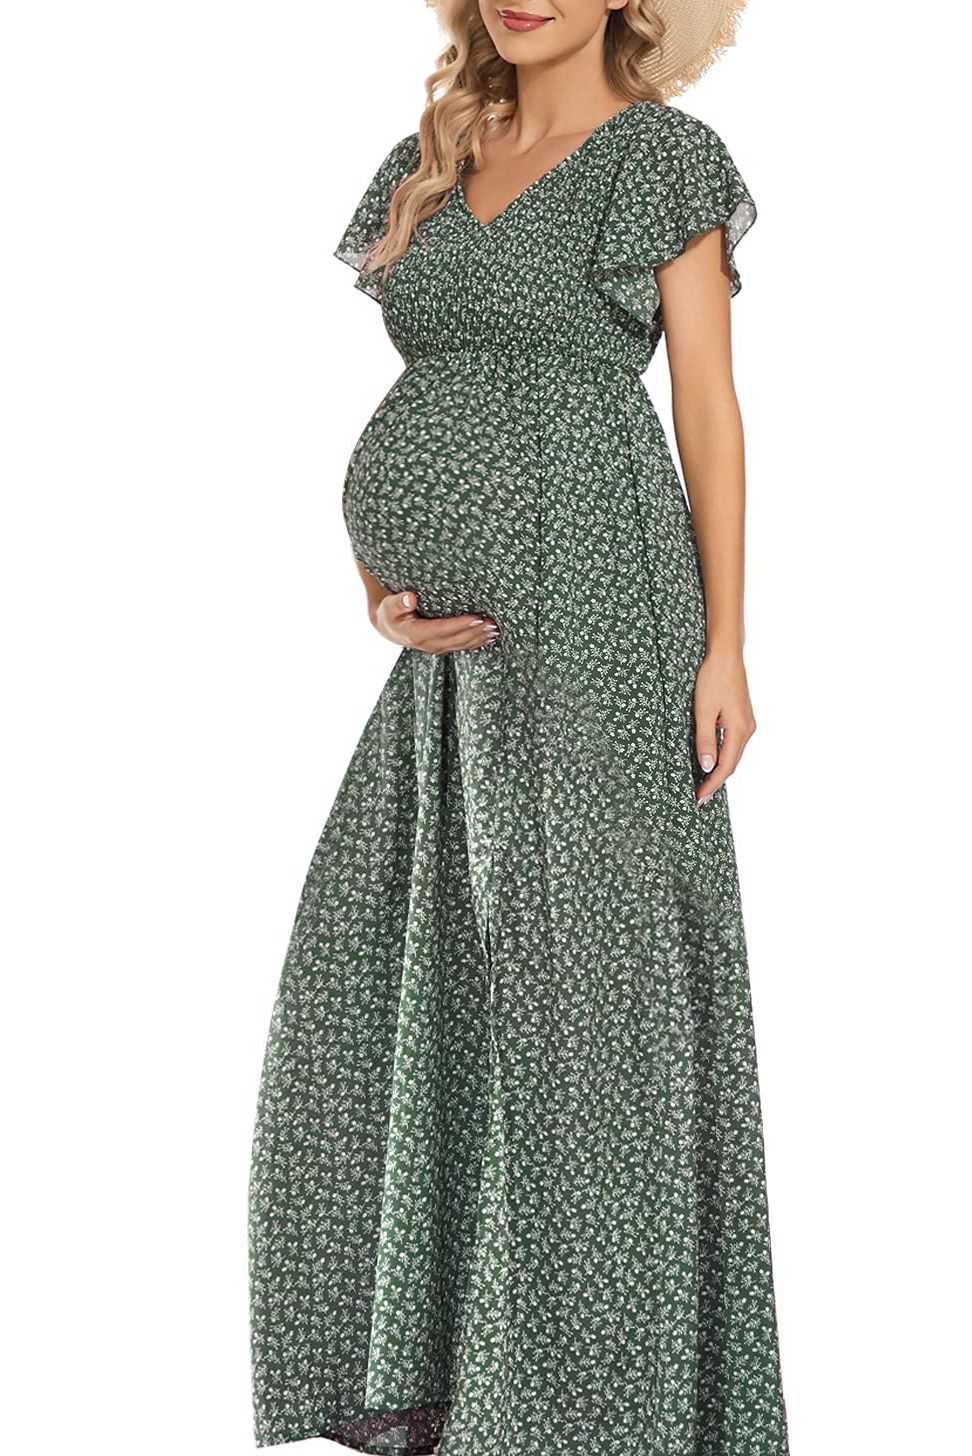 Swiss Dot Maternity Dress, V Neck Ruffle Sleeve Maternity Dresses for  Photoshoot Baby Shower, Smocked Tiered Pregnancy Dress